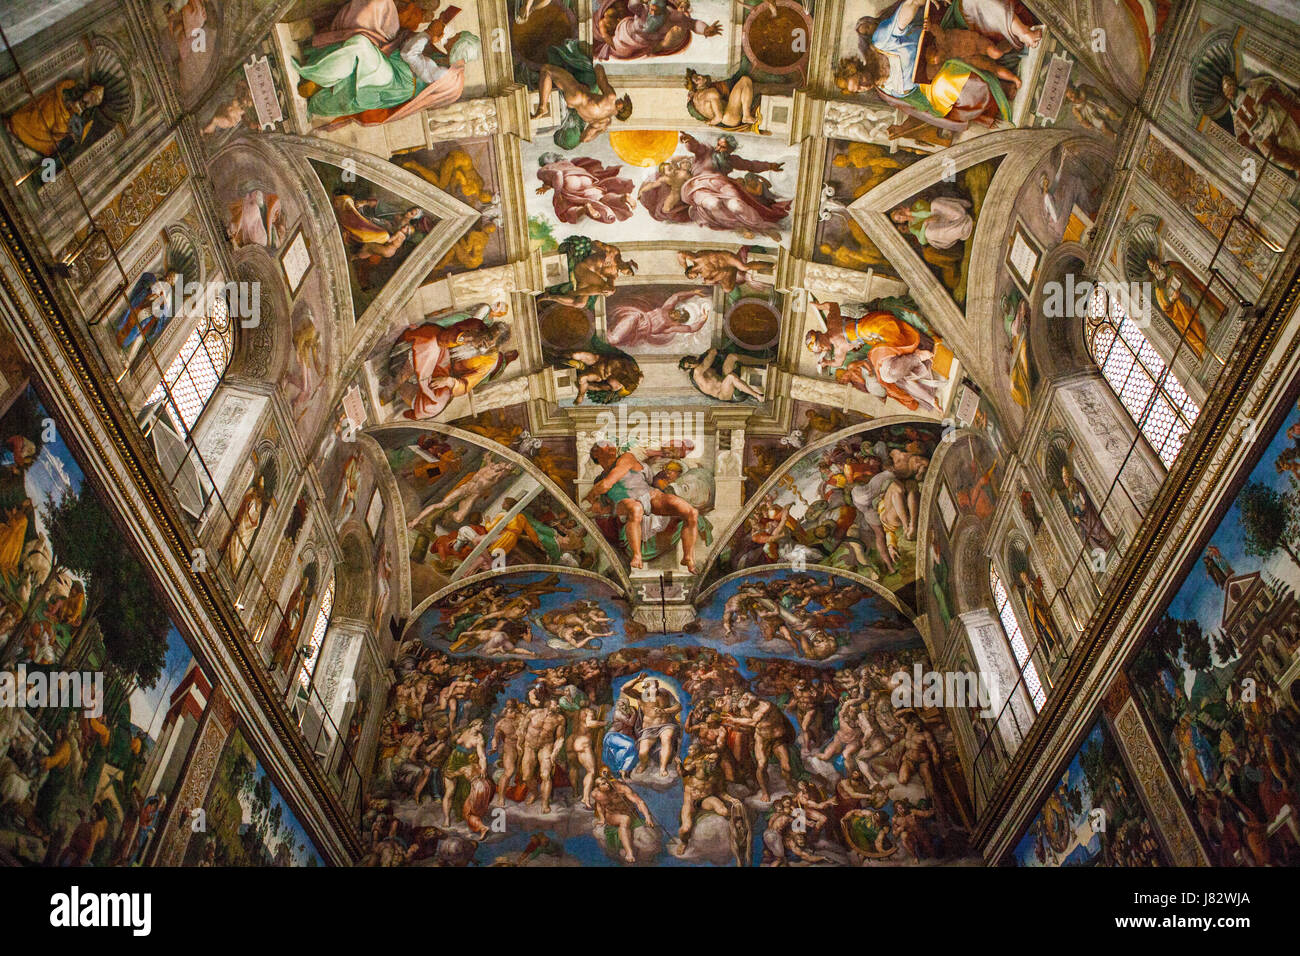 Vatikan, Rom - März 02, 2016: Interieur und architektonische Details der Sixtinischen Kapelle, März 02, 2016, Vatikan, Rom, Italien. Stockfoto